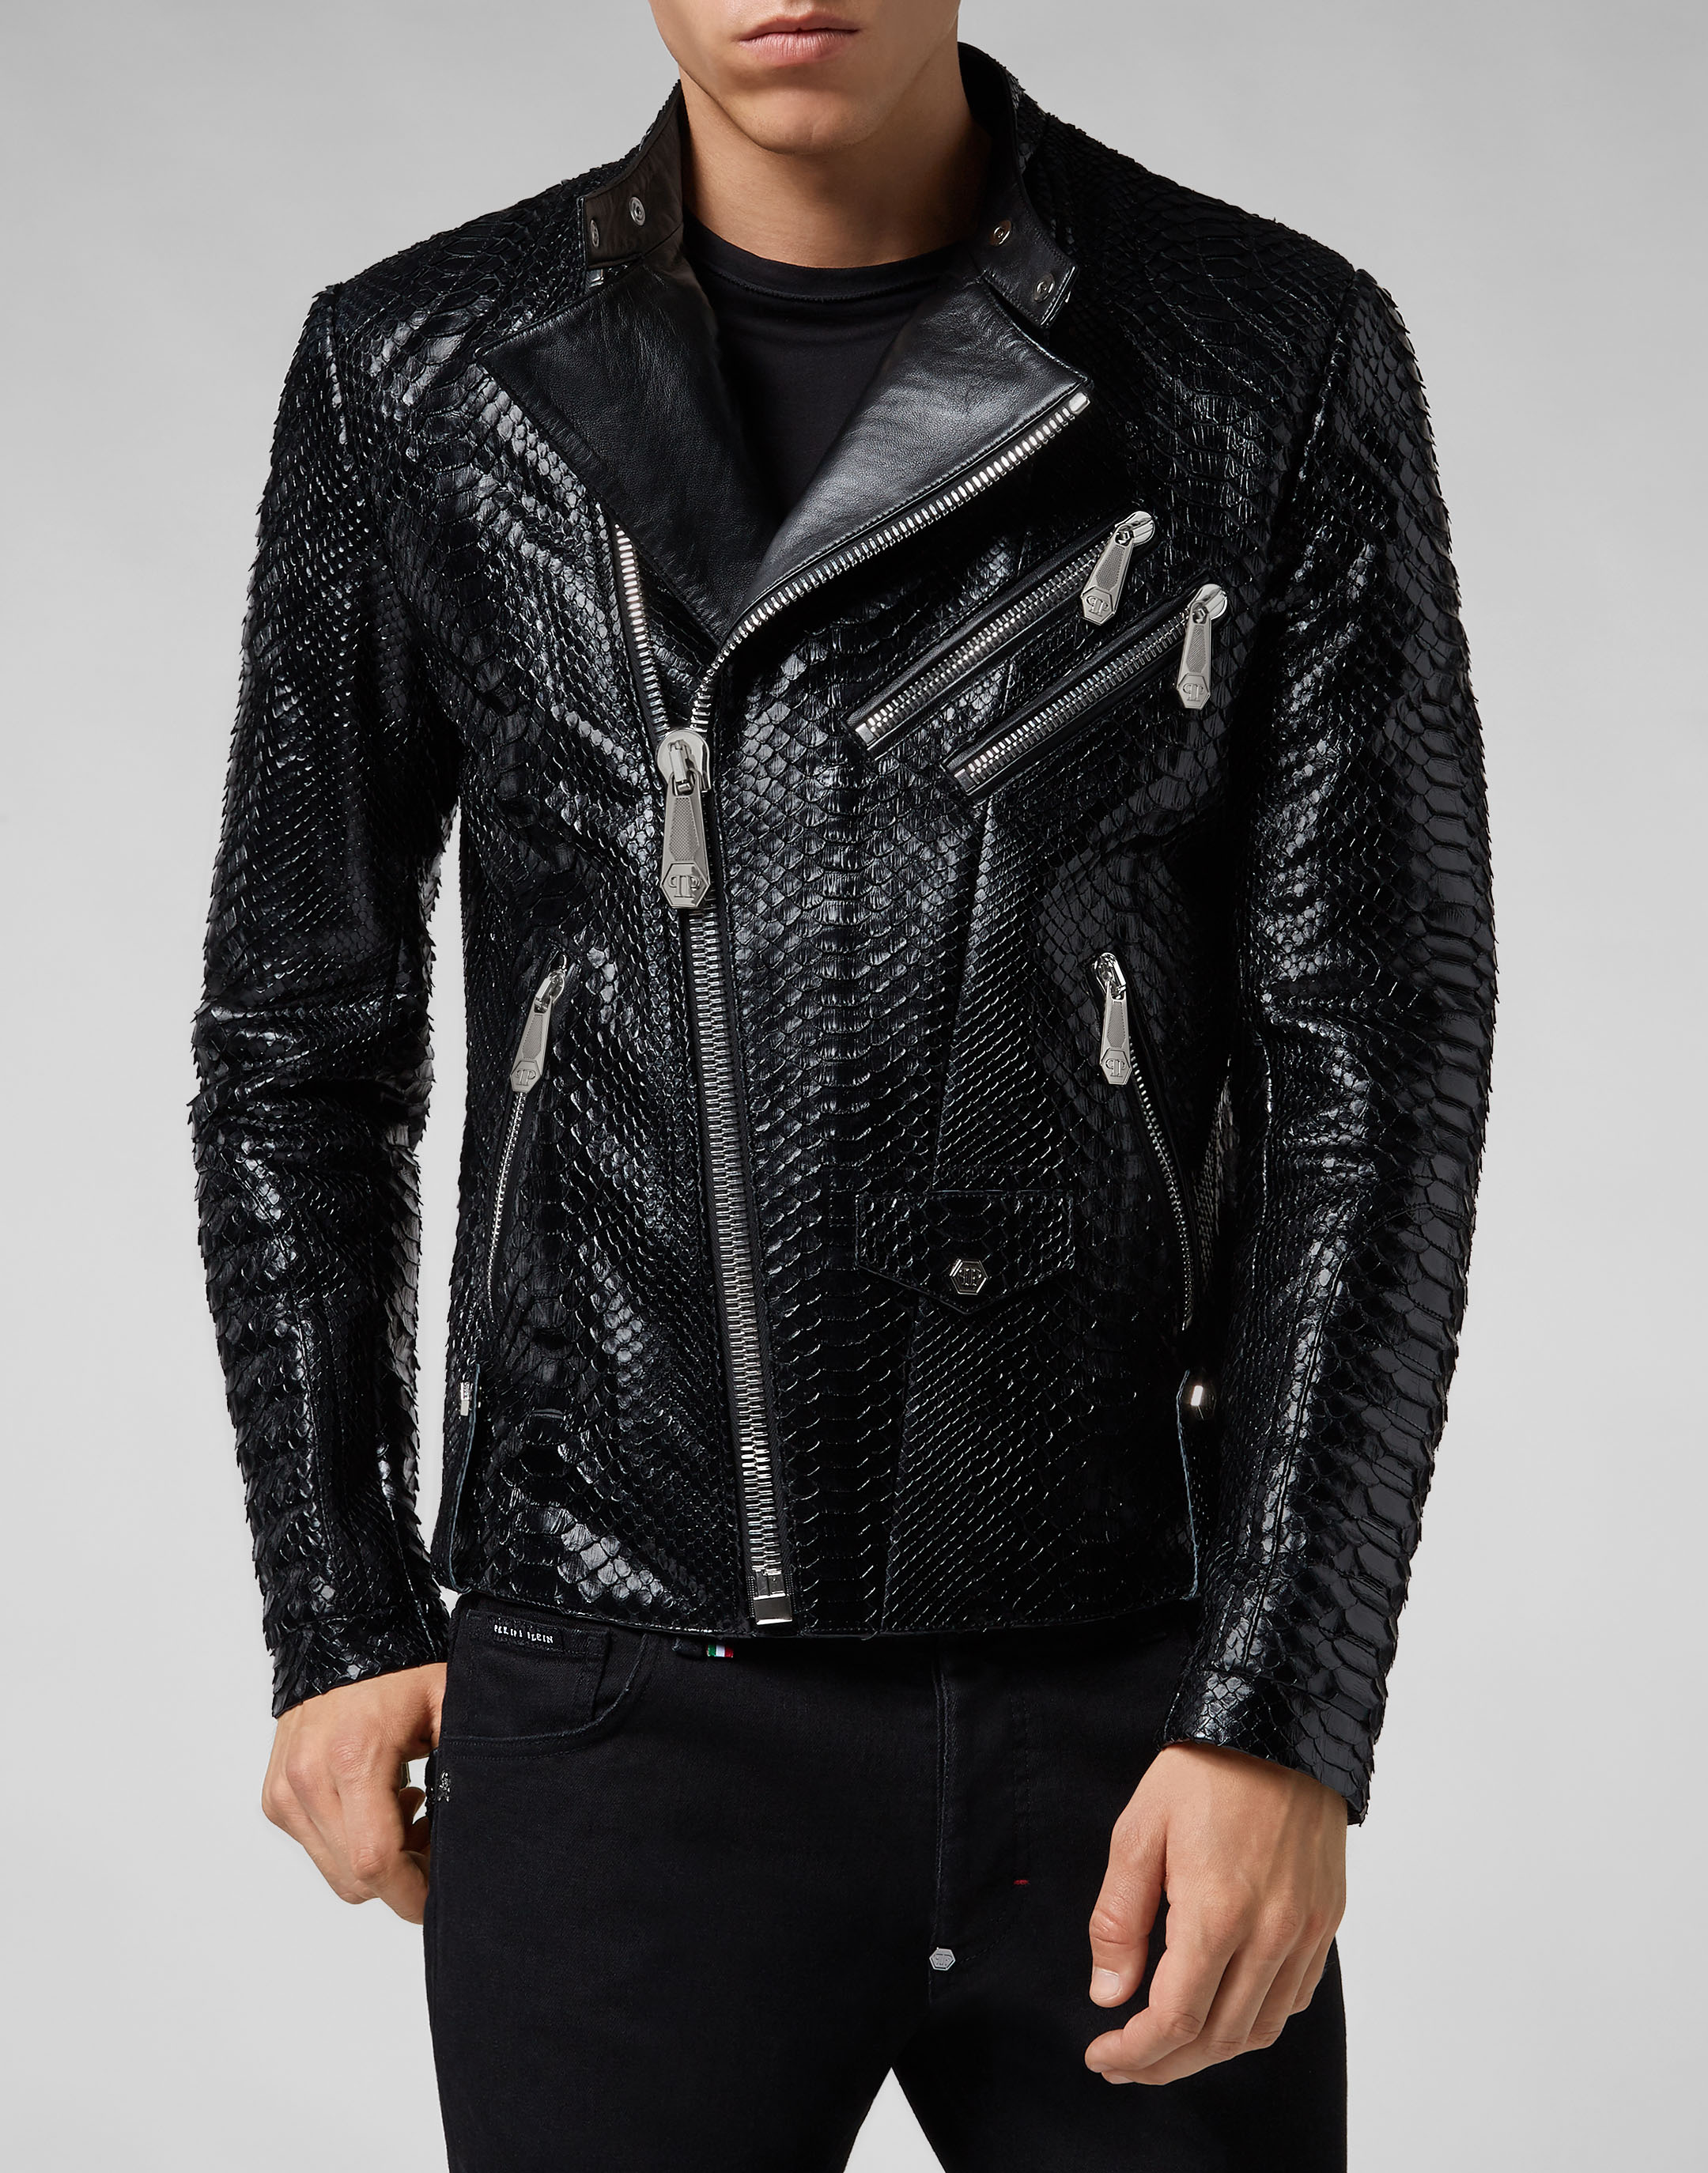 Куртка из питона мужская. Косуха Philipp plein мужская. Philipp plein Biker Leather Jacket.